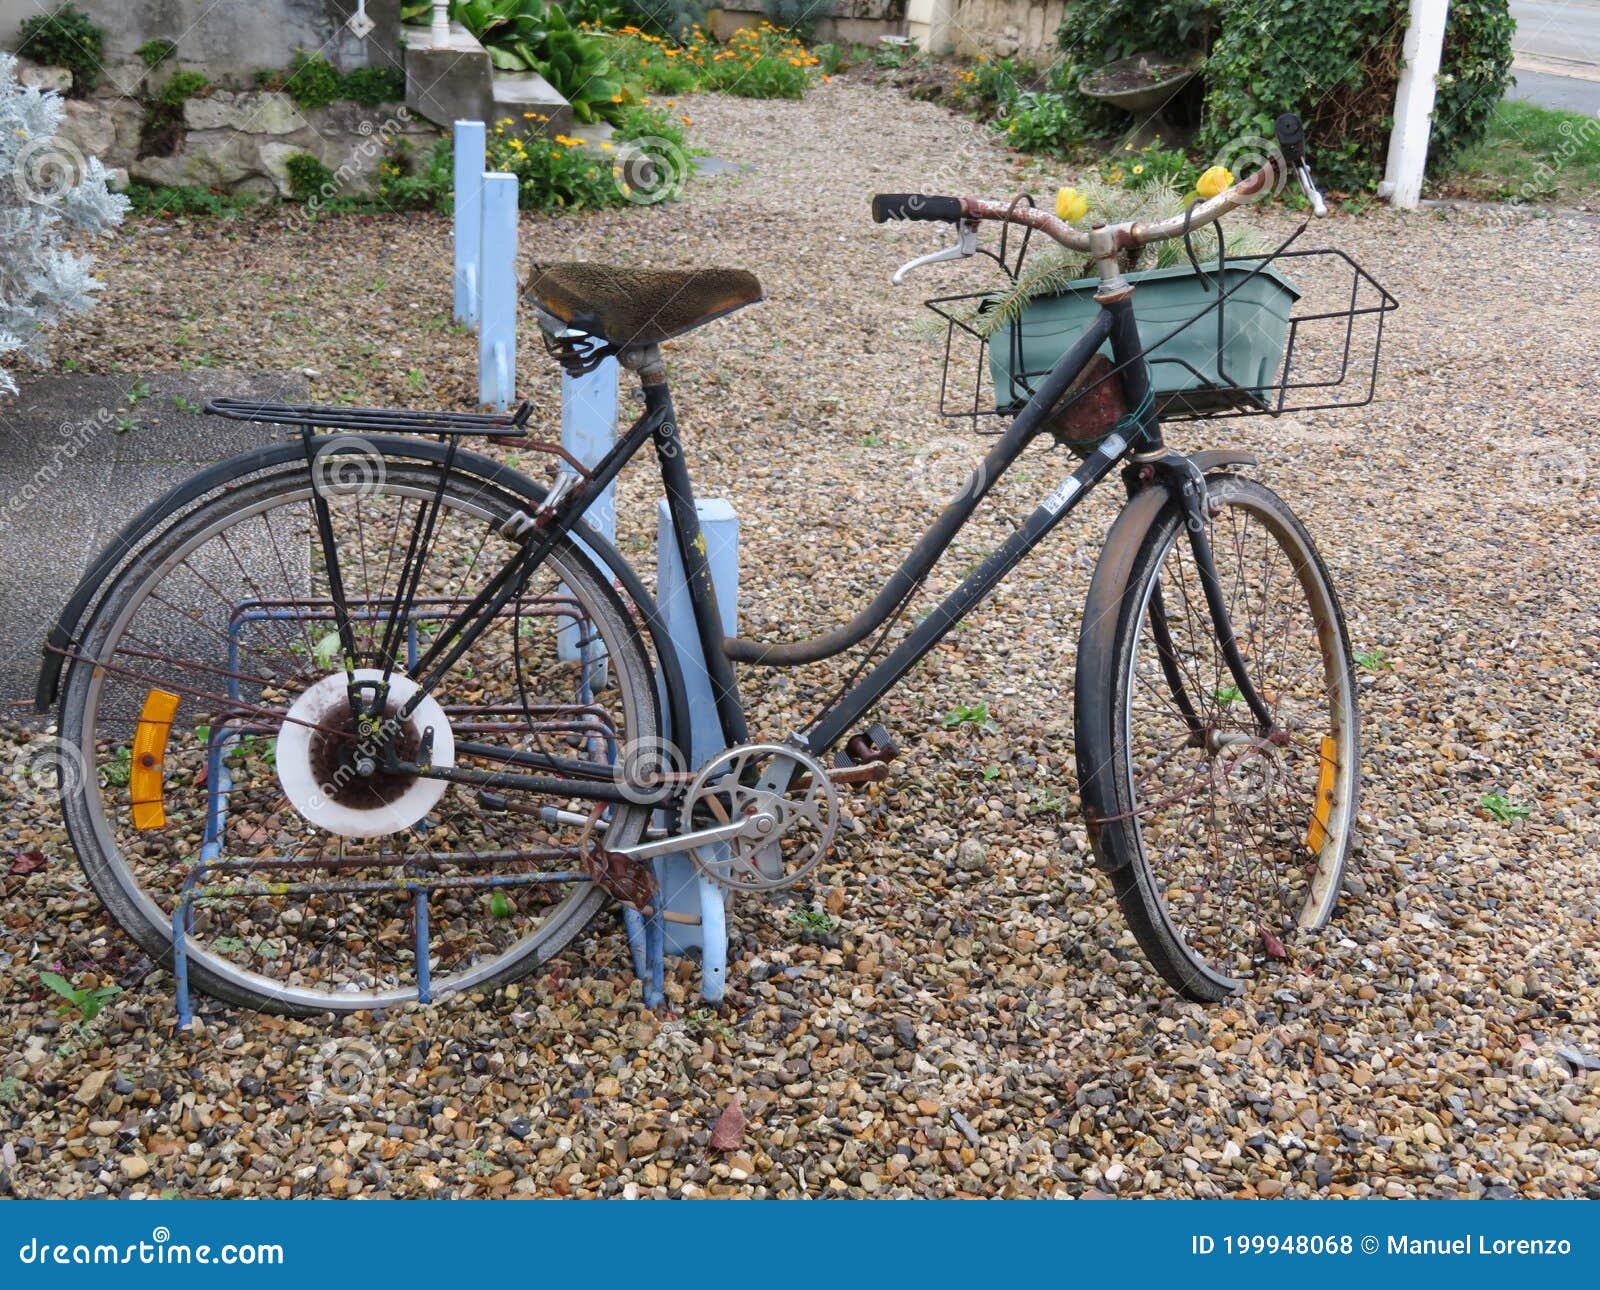 beautiful old bike bike used for gardener and decoration